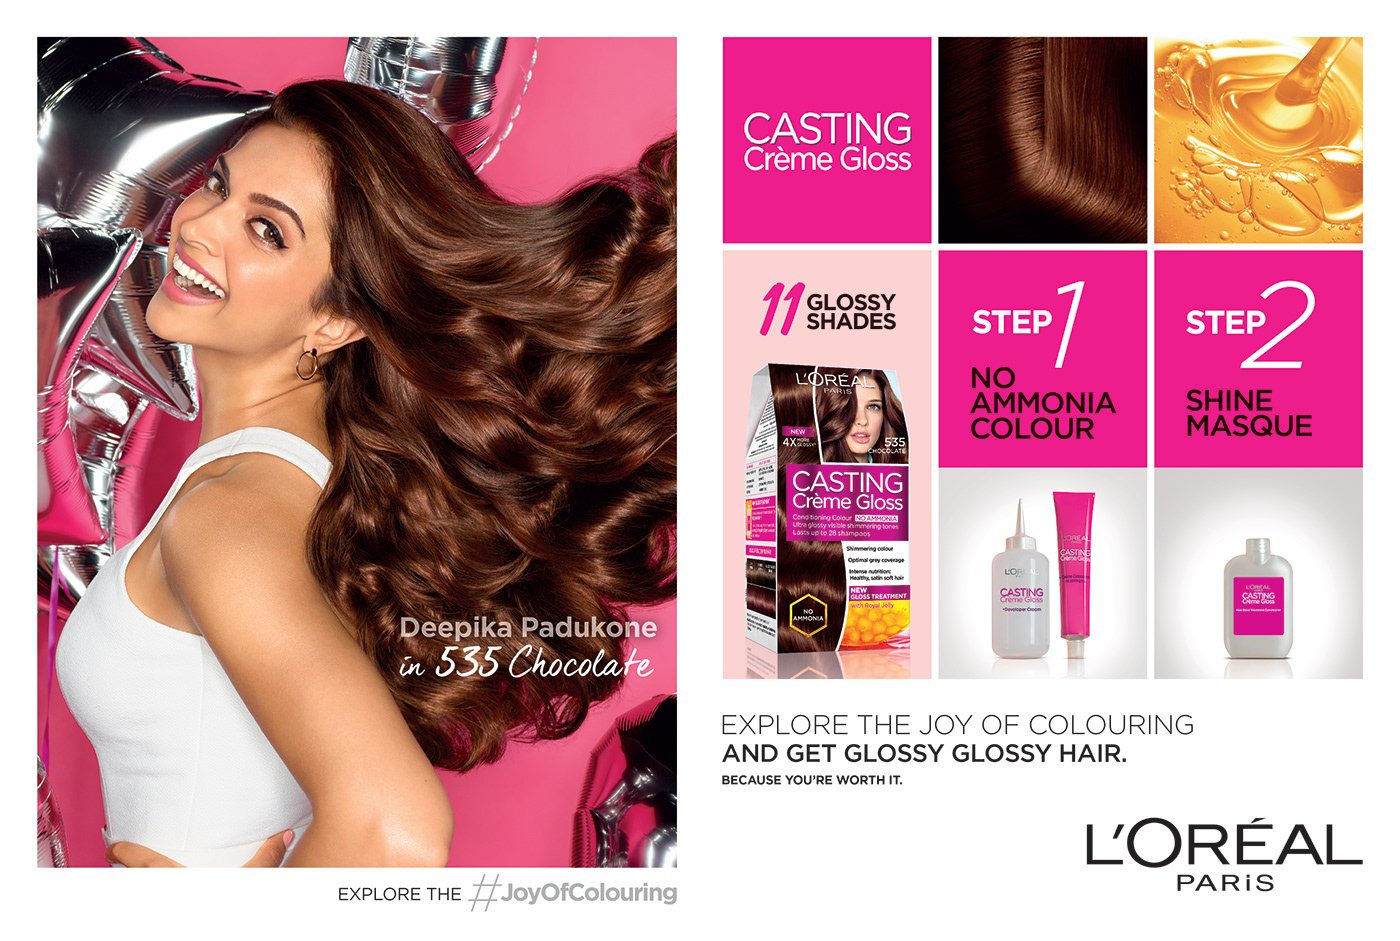 loreal paris loreal paris india casting creme gloss hair colour Joy Of Colouring